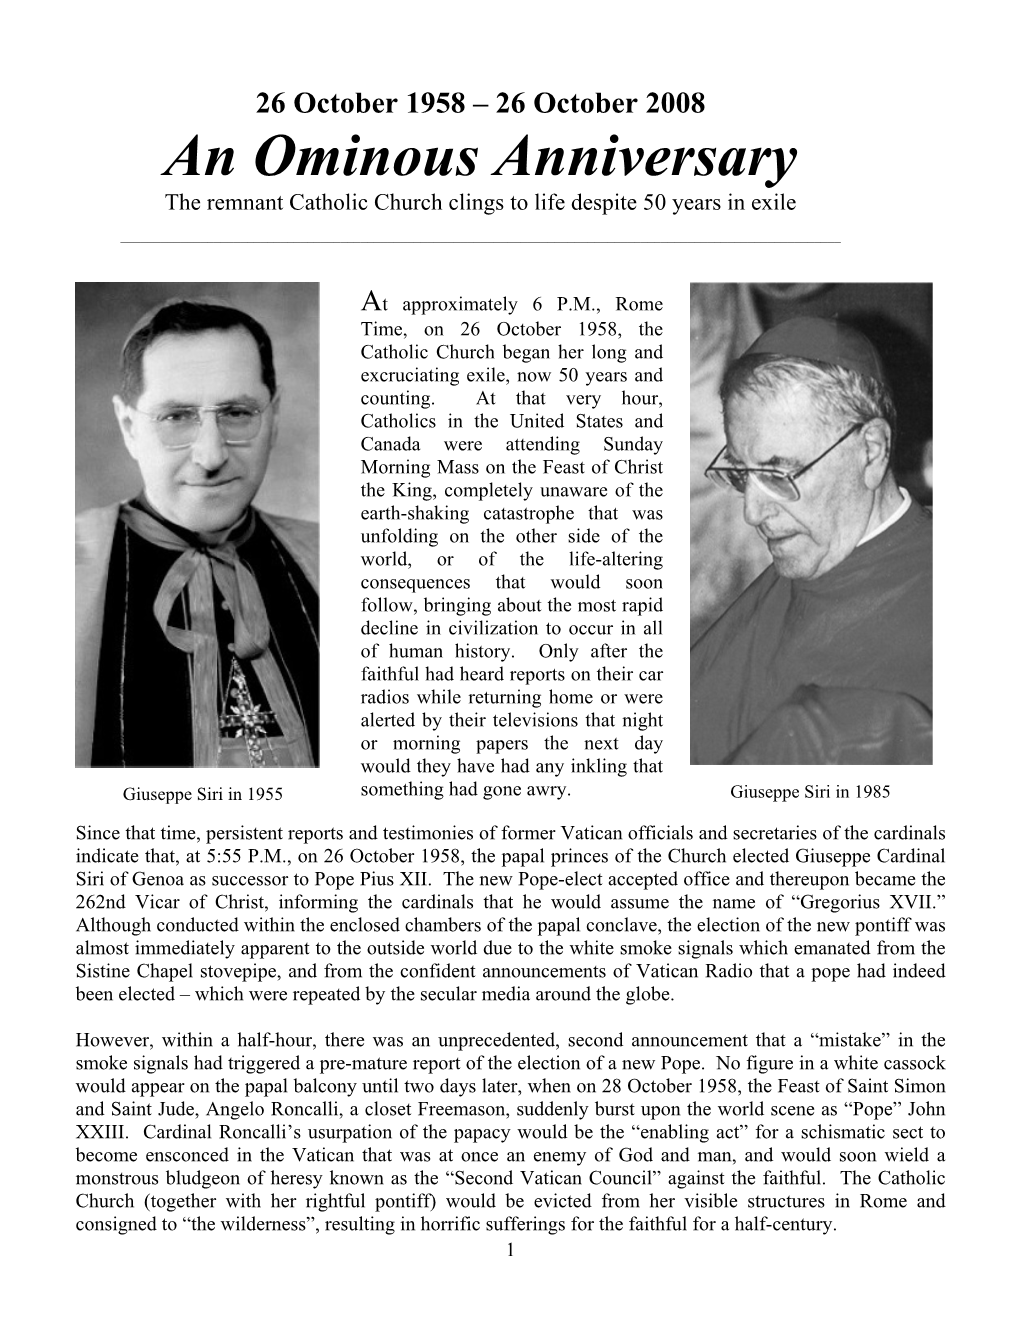 An Ominous Anniversary -- October 26, 2008